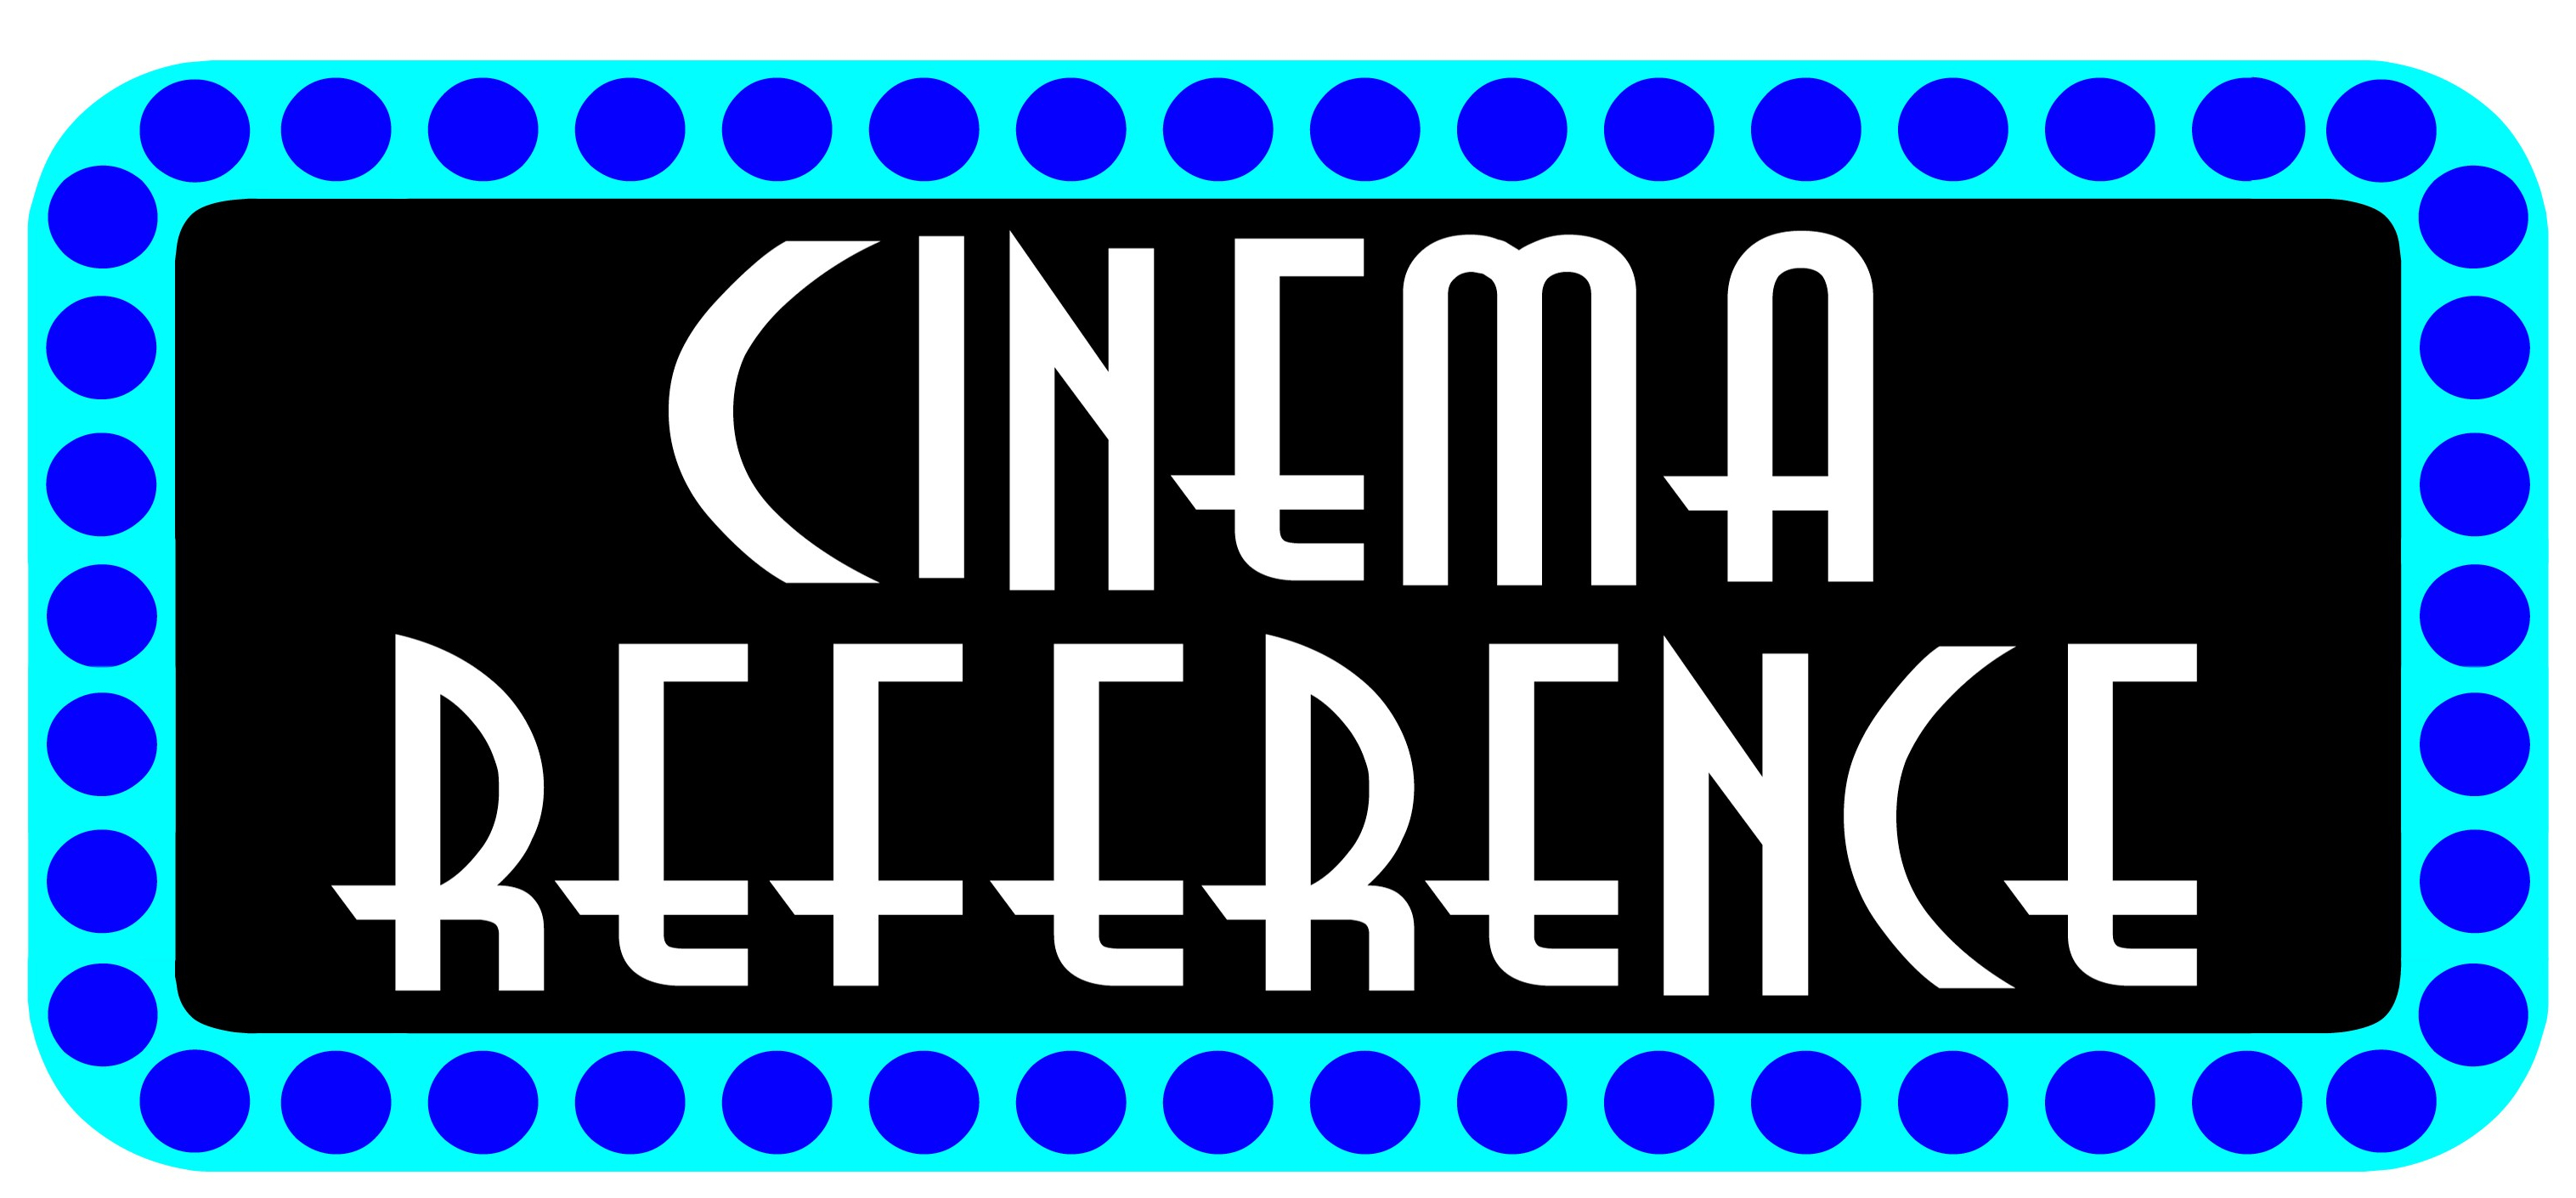 Cinema Reference logo blue